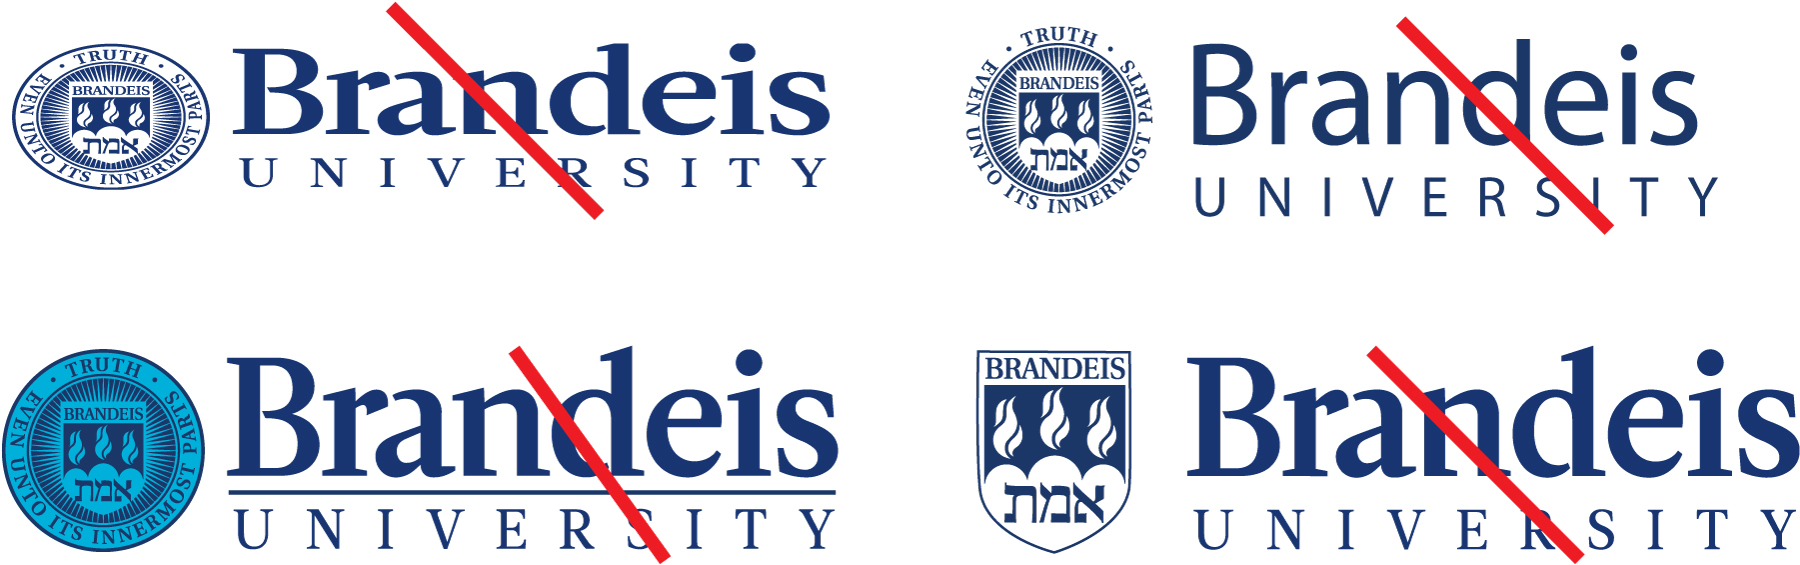 Incorrect uses of the Brandeis logo